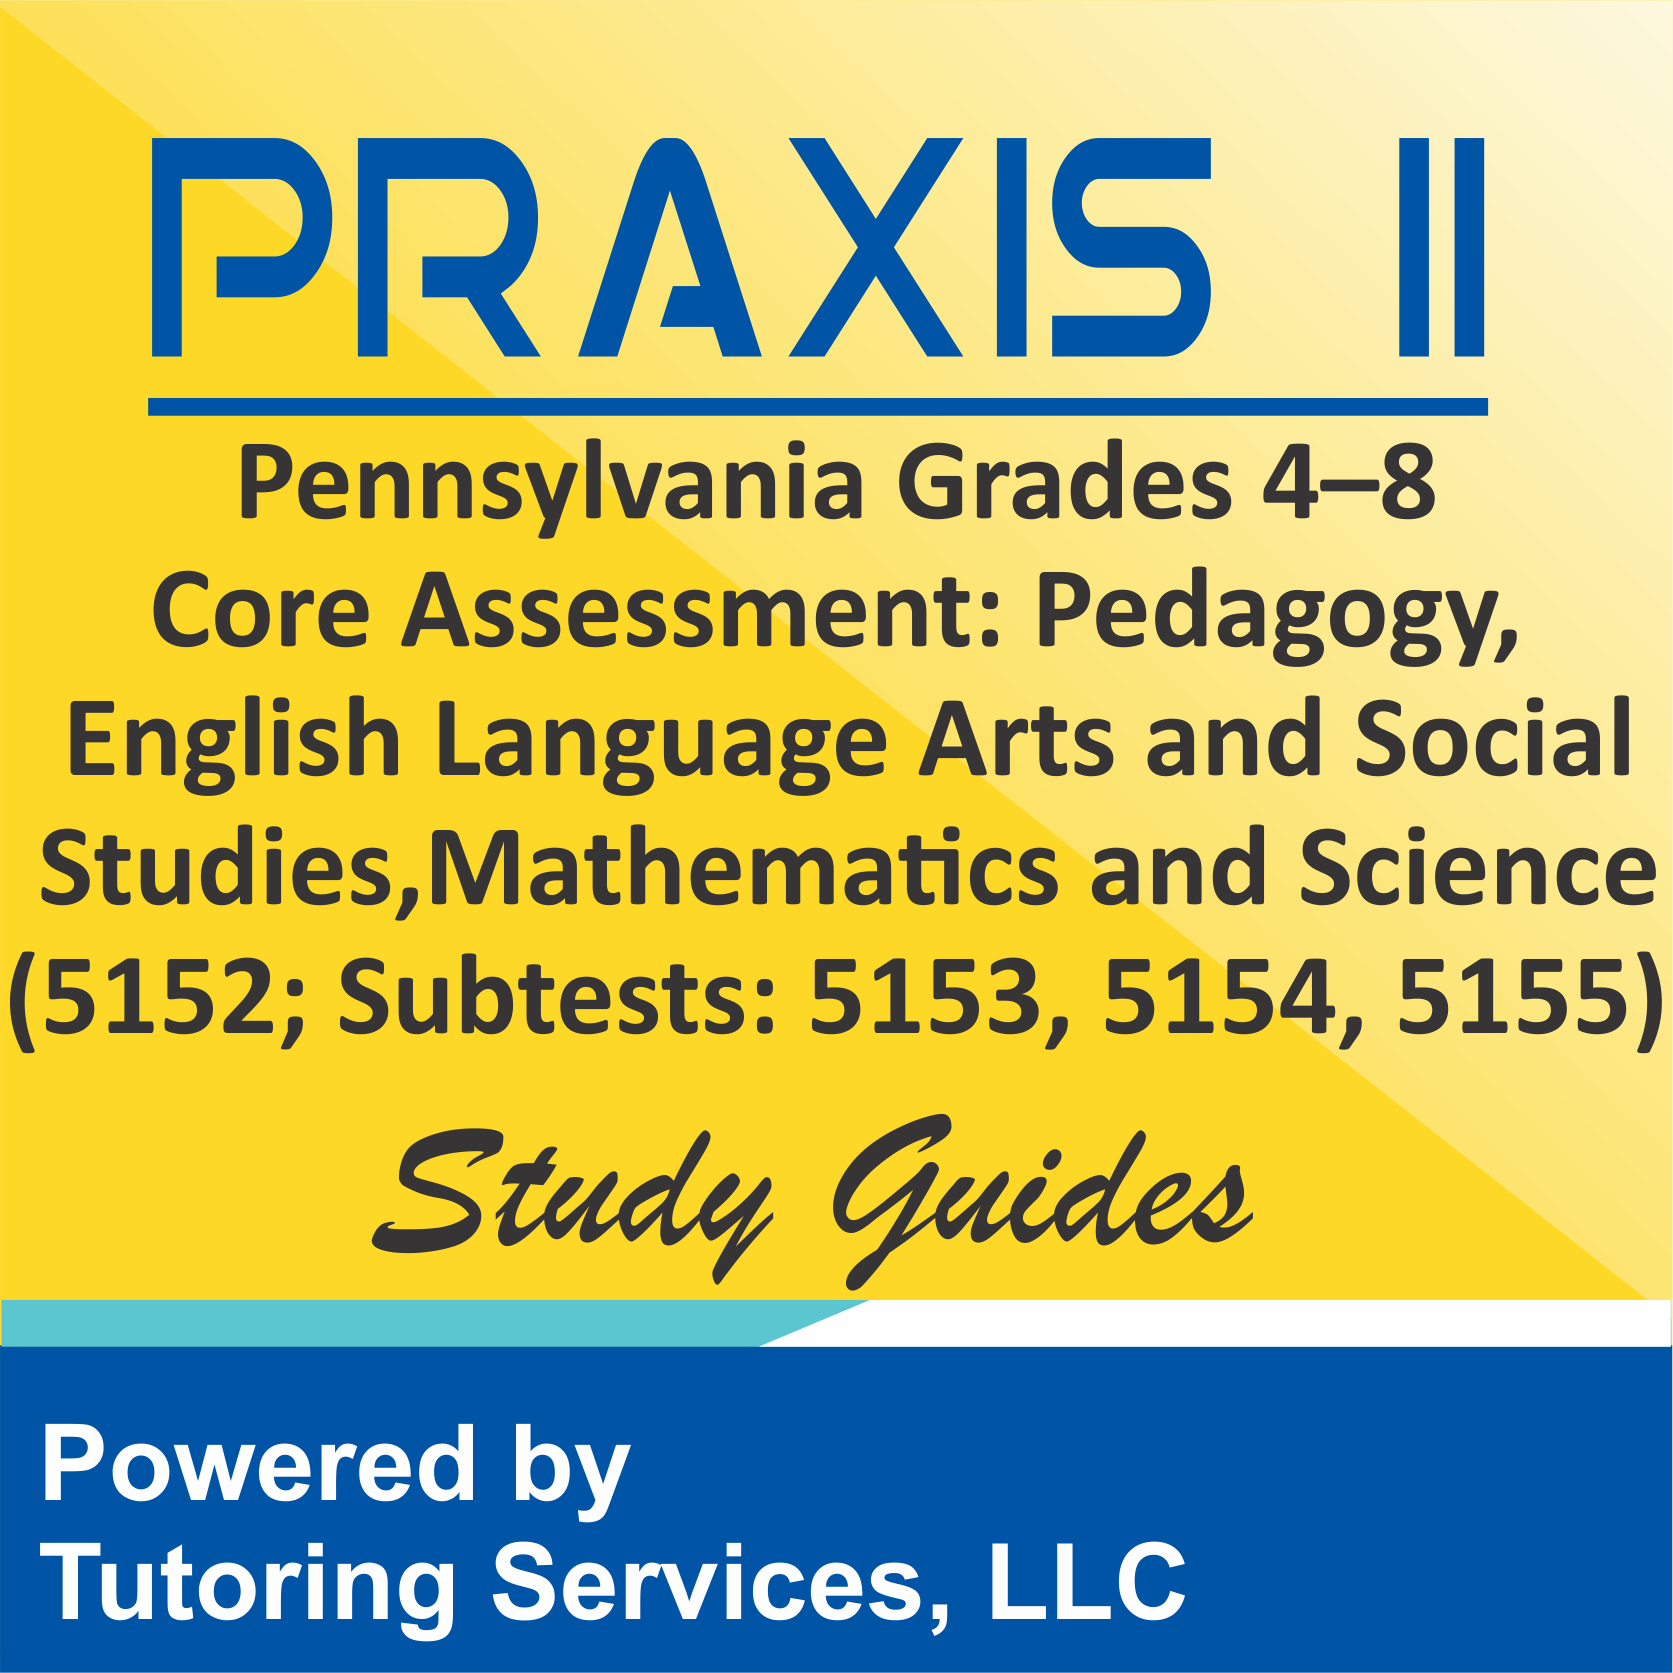 Praxis II Pennsylvania Grades 4-8 Core Assessment (5152) Examination Syllabus